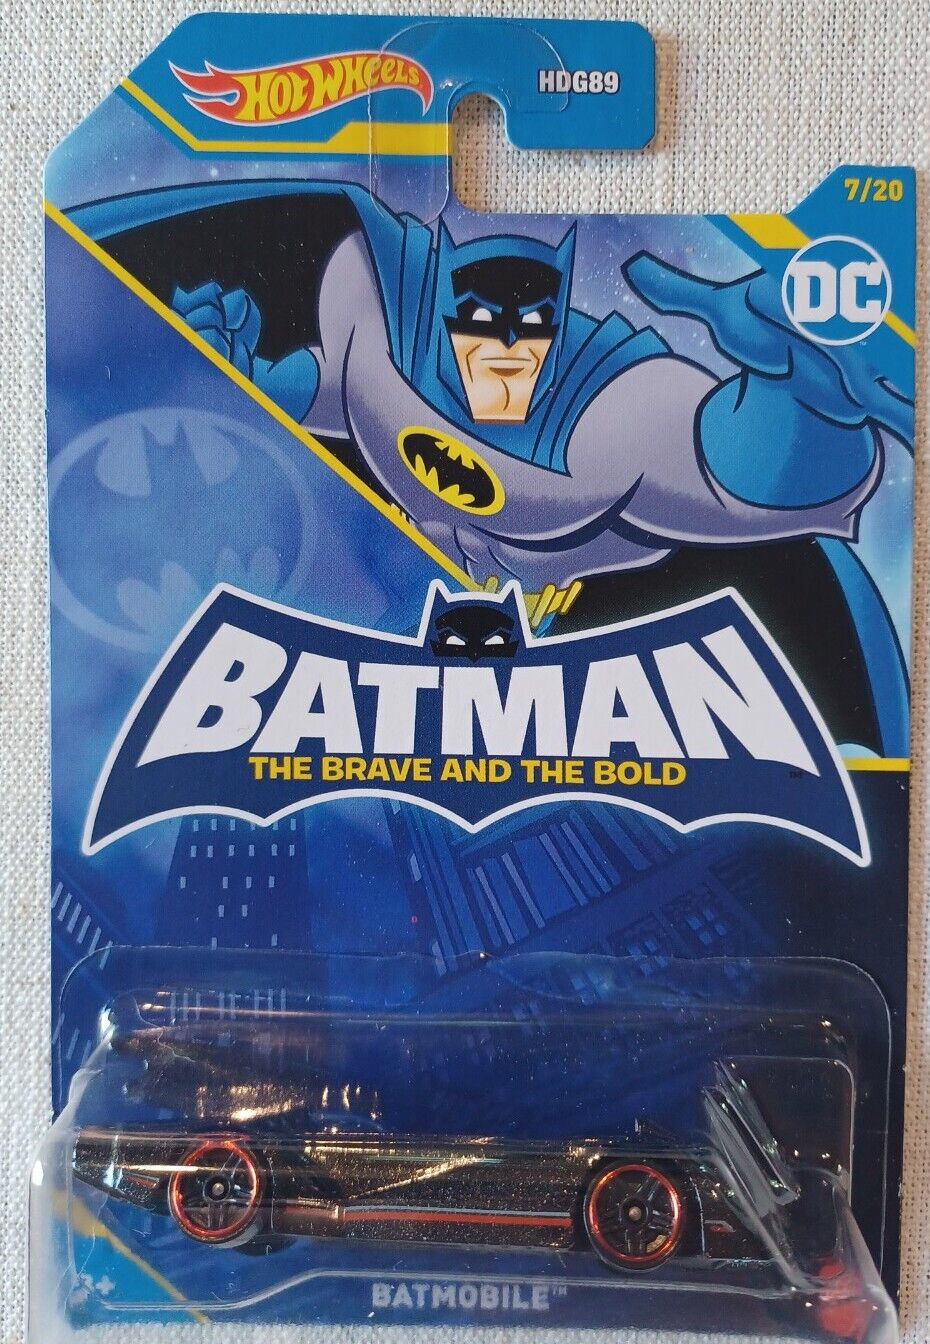 Hot Wheels DC Batman The Brave And The Bold Batmobile 7/20 HDG89 HLK61  (LONG CARD)